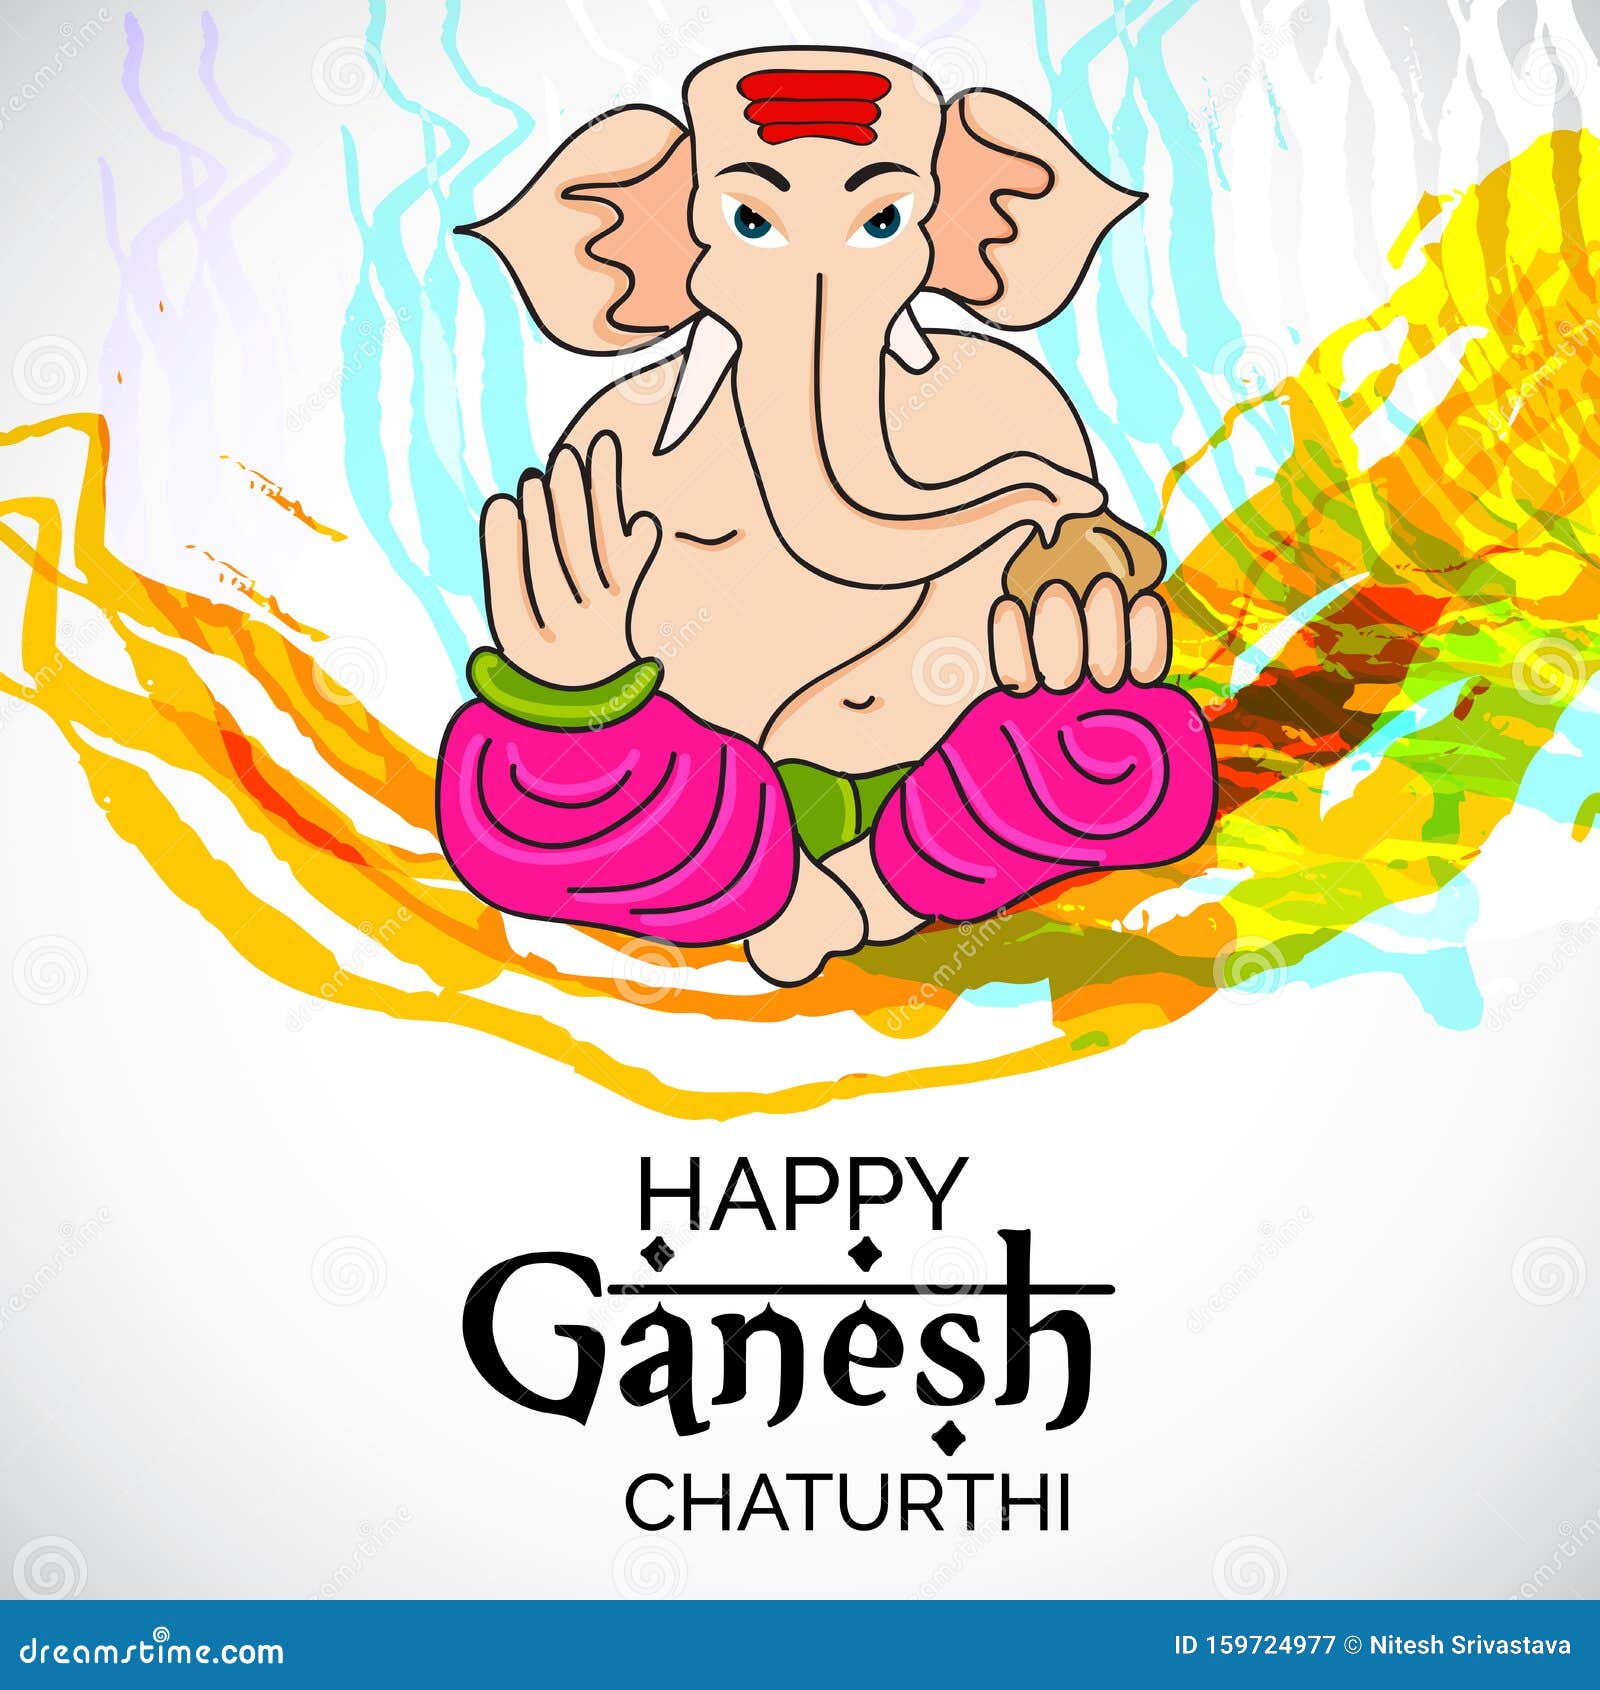 Ganesh Chaturthi stock illustration. Illustration of card - 159724977